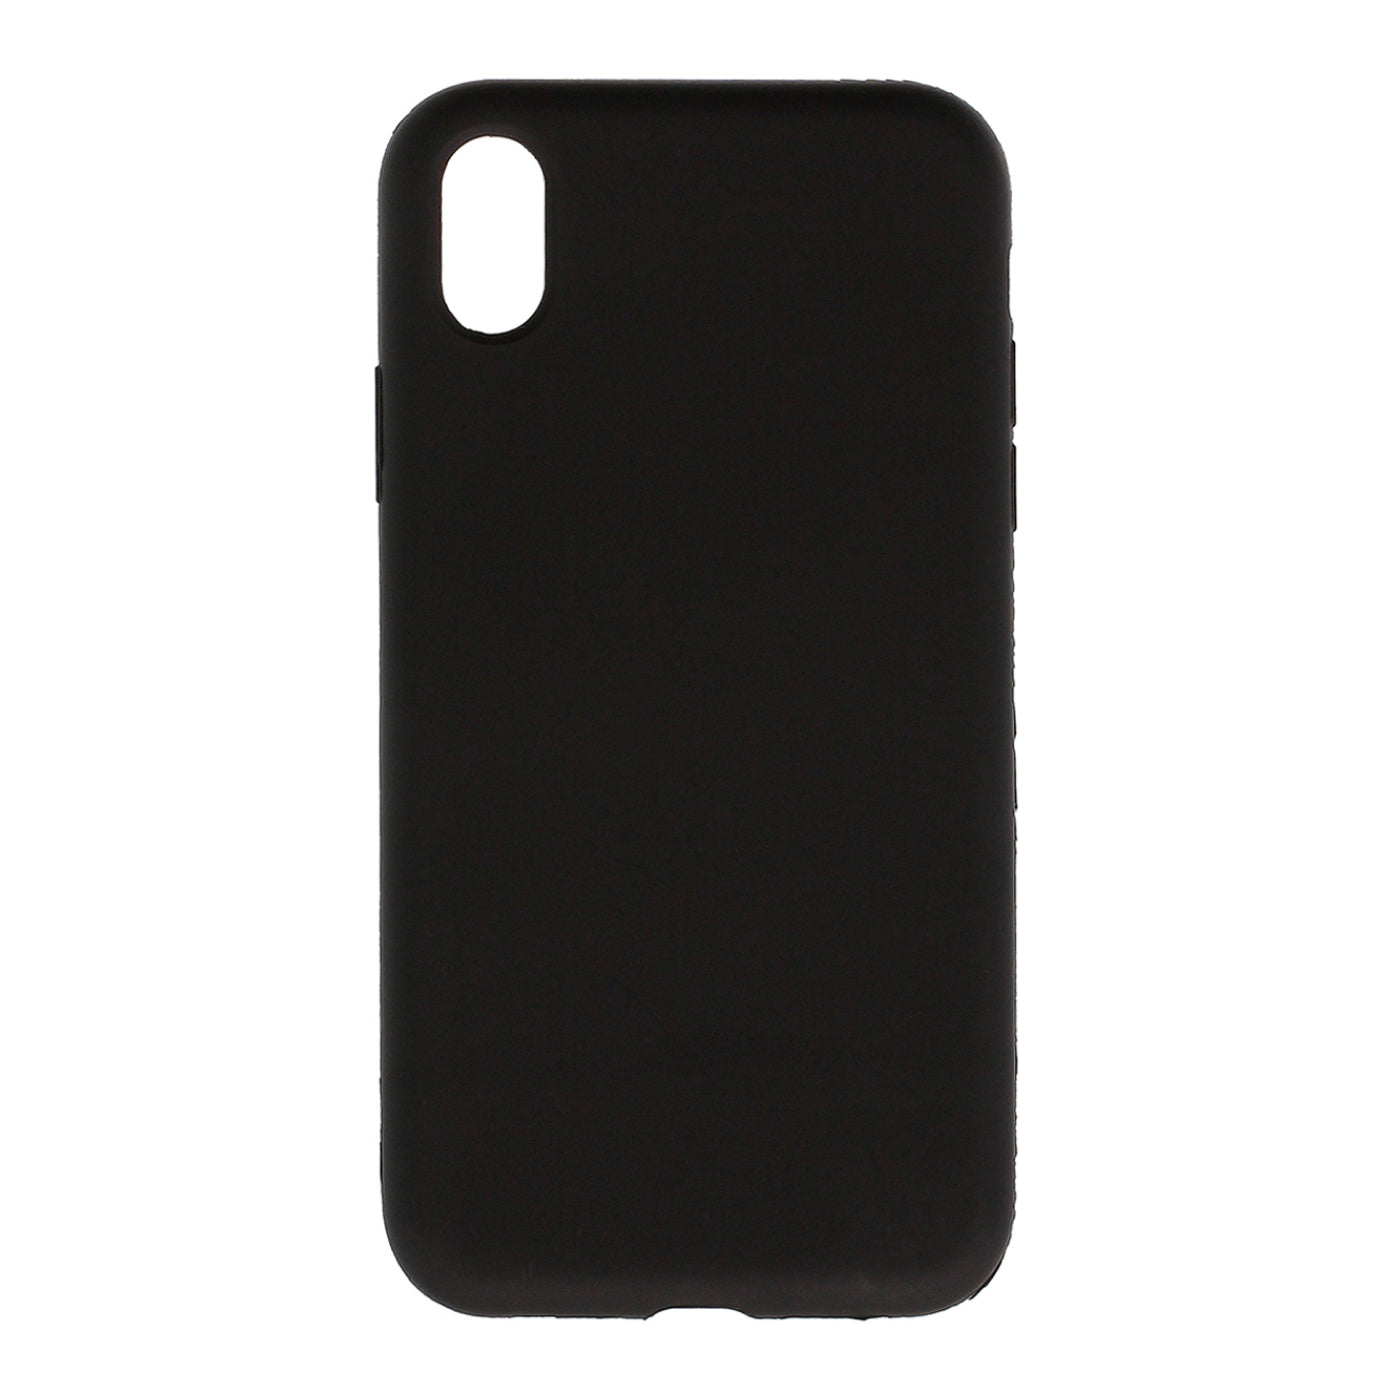 Liquid Phone Case - Black - Apple iPhone XR Black New - Sealed